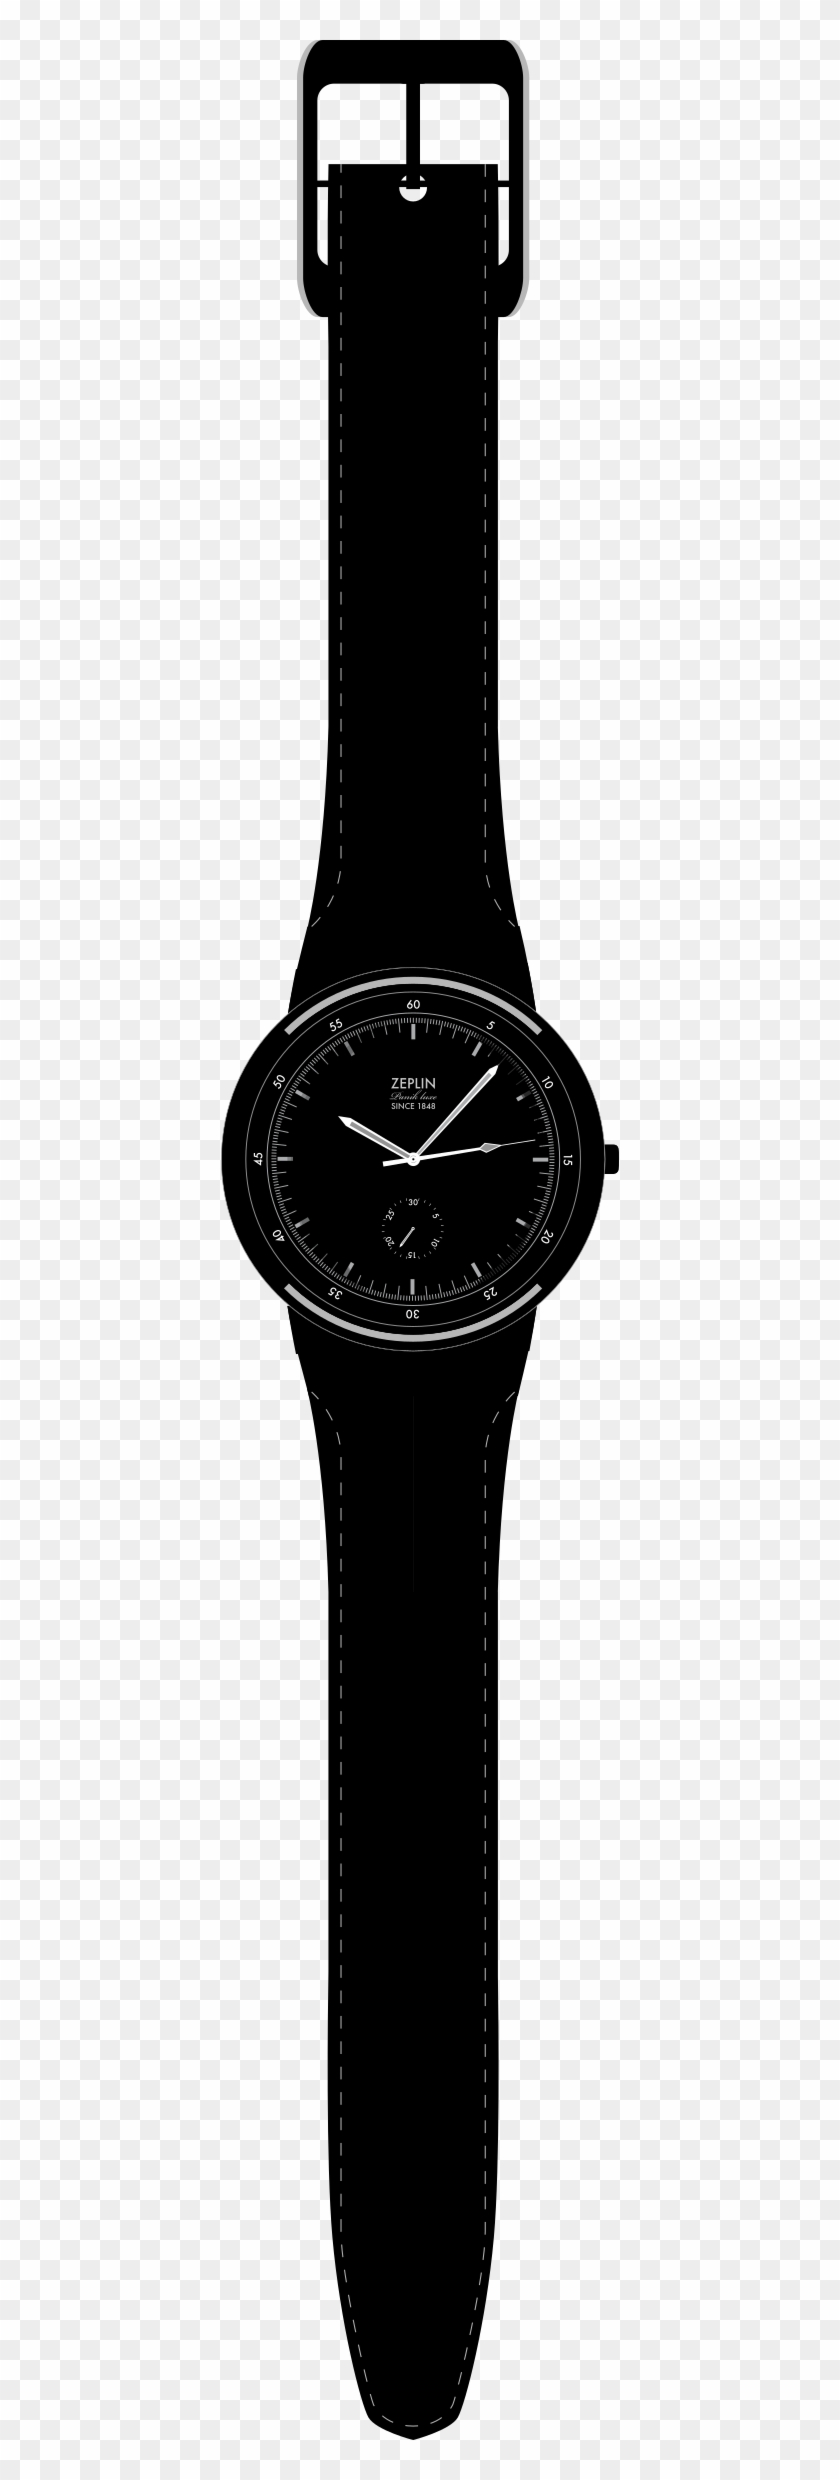 Big Image - Black Watch Clipart #418555